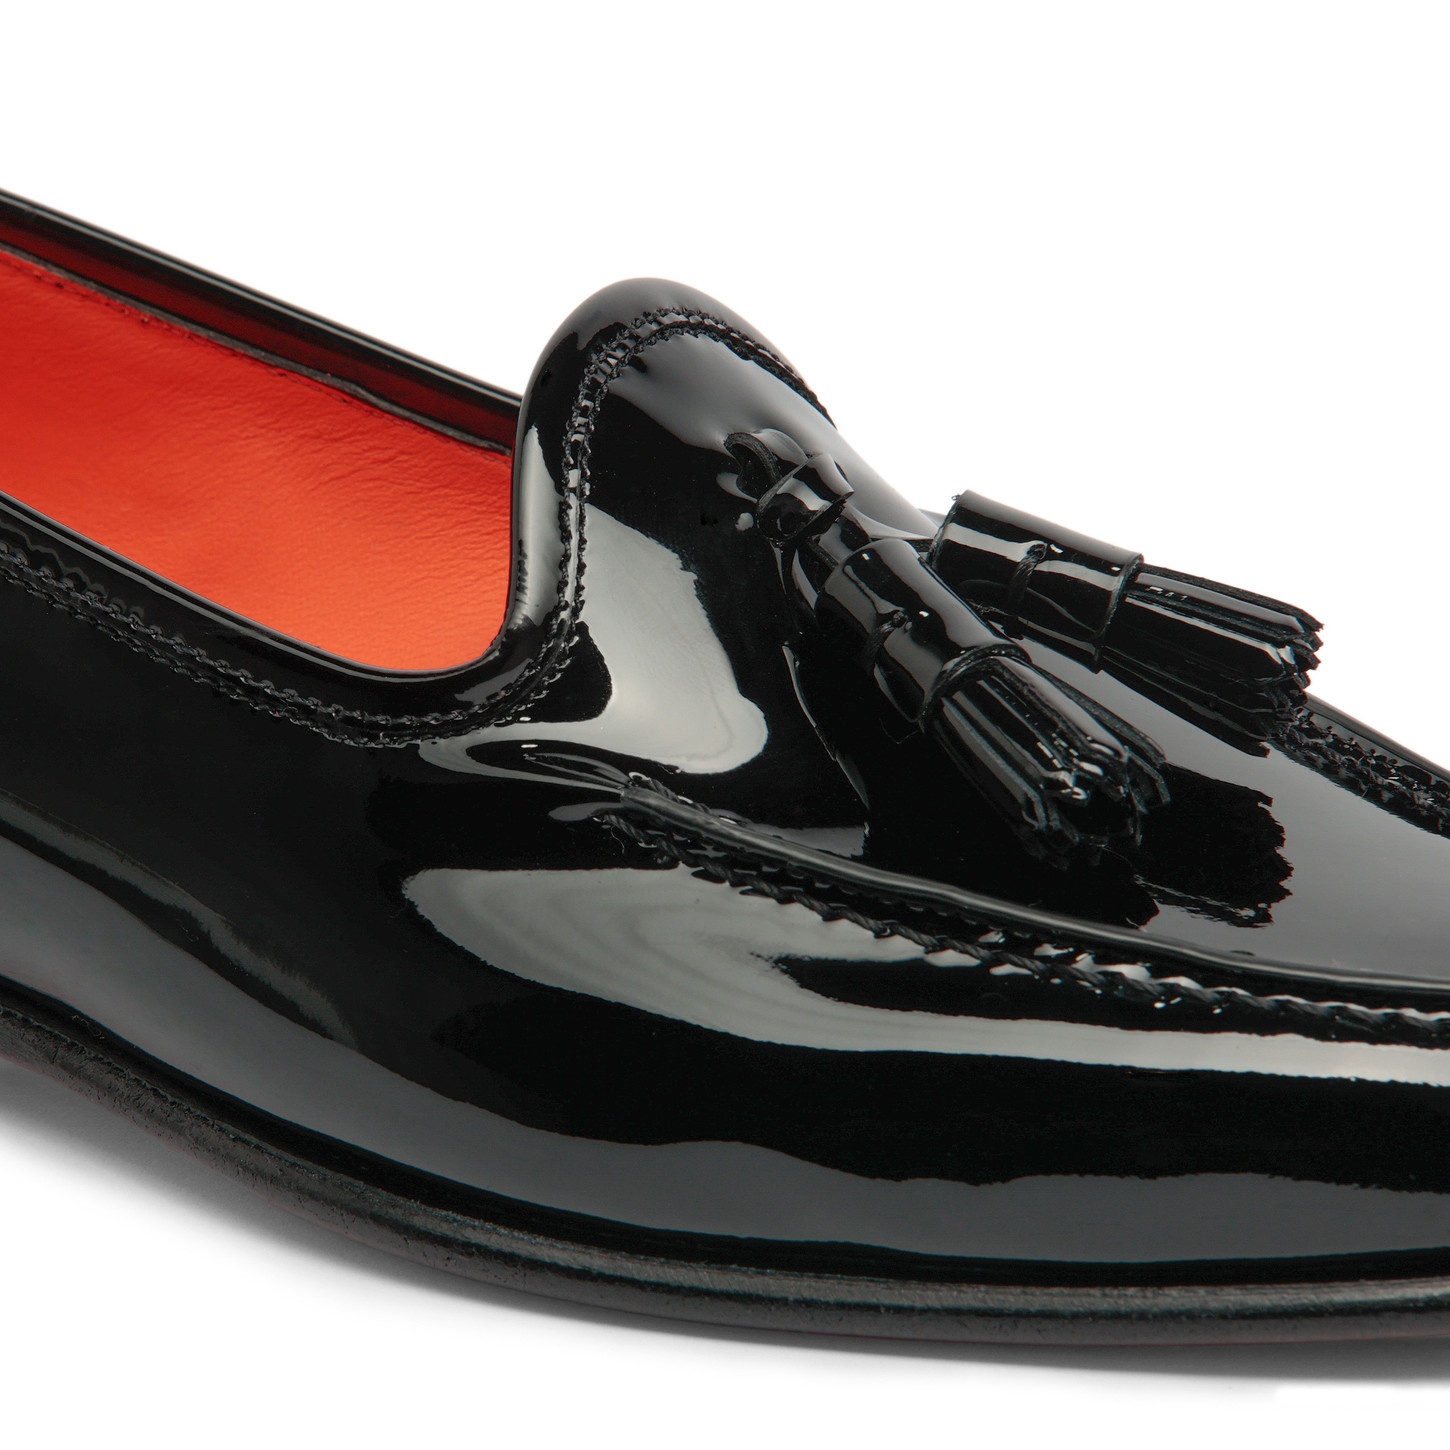 Women’s black patent leather Andrea tassel loafer - 6